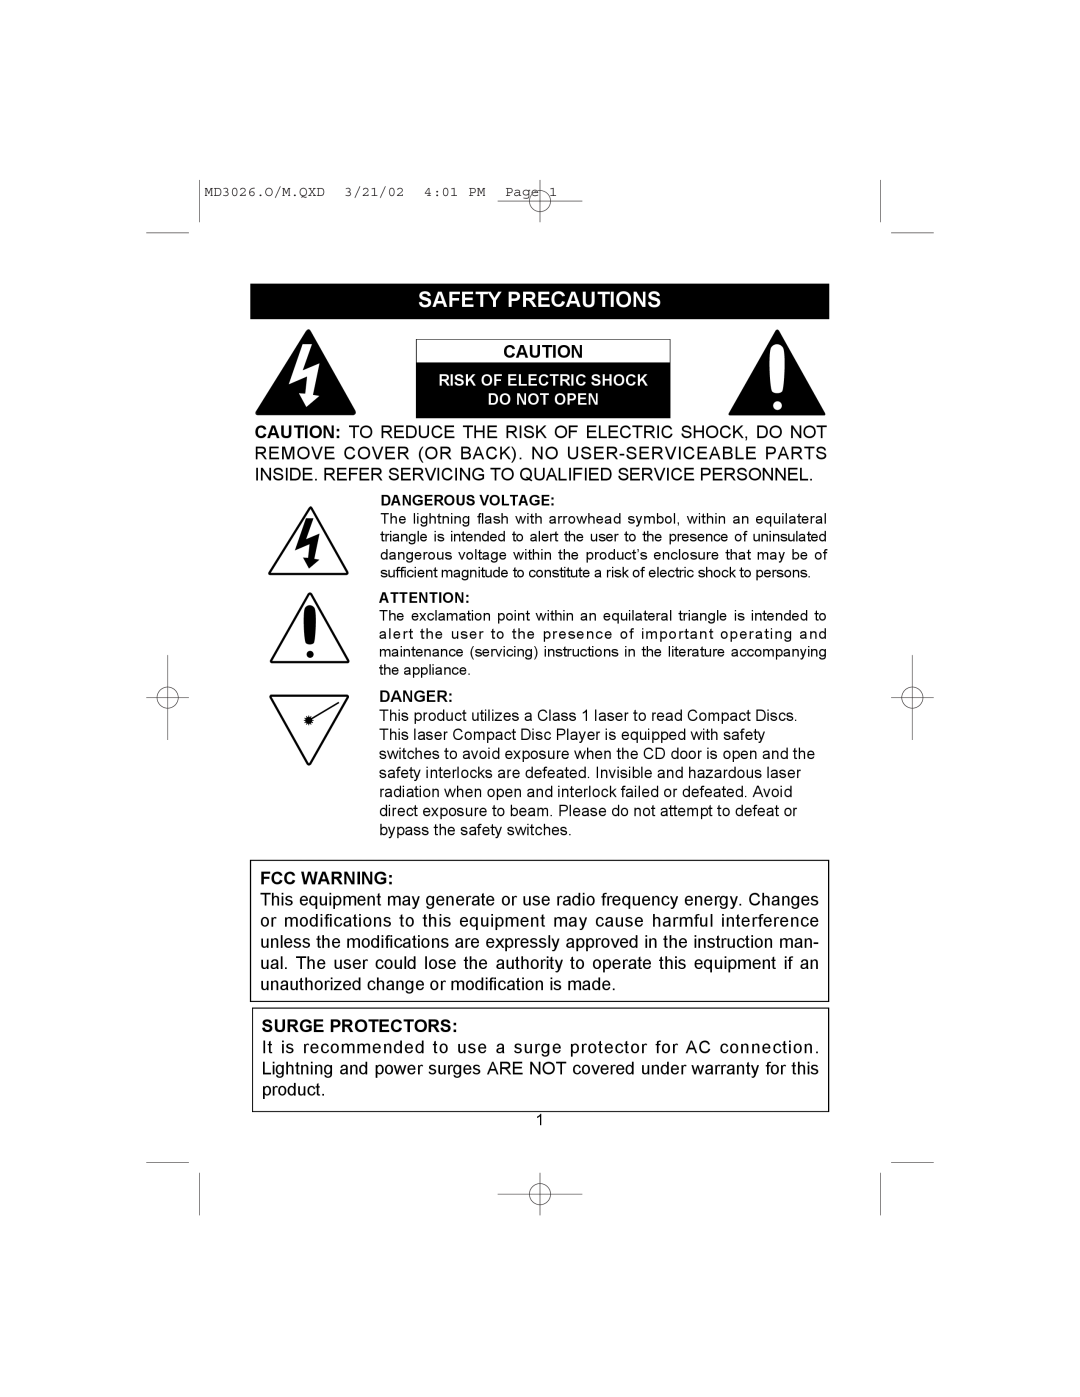 Memorex MD3026 manual Safety Precautions, Fcc Warning, Surge Protectors 